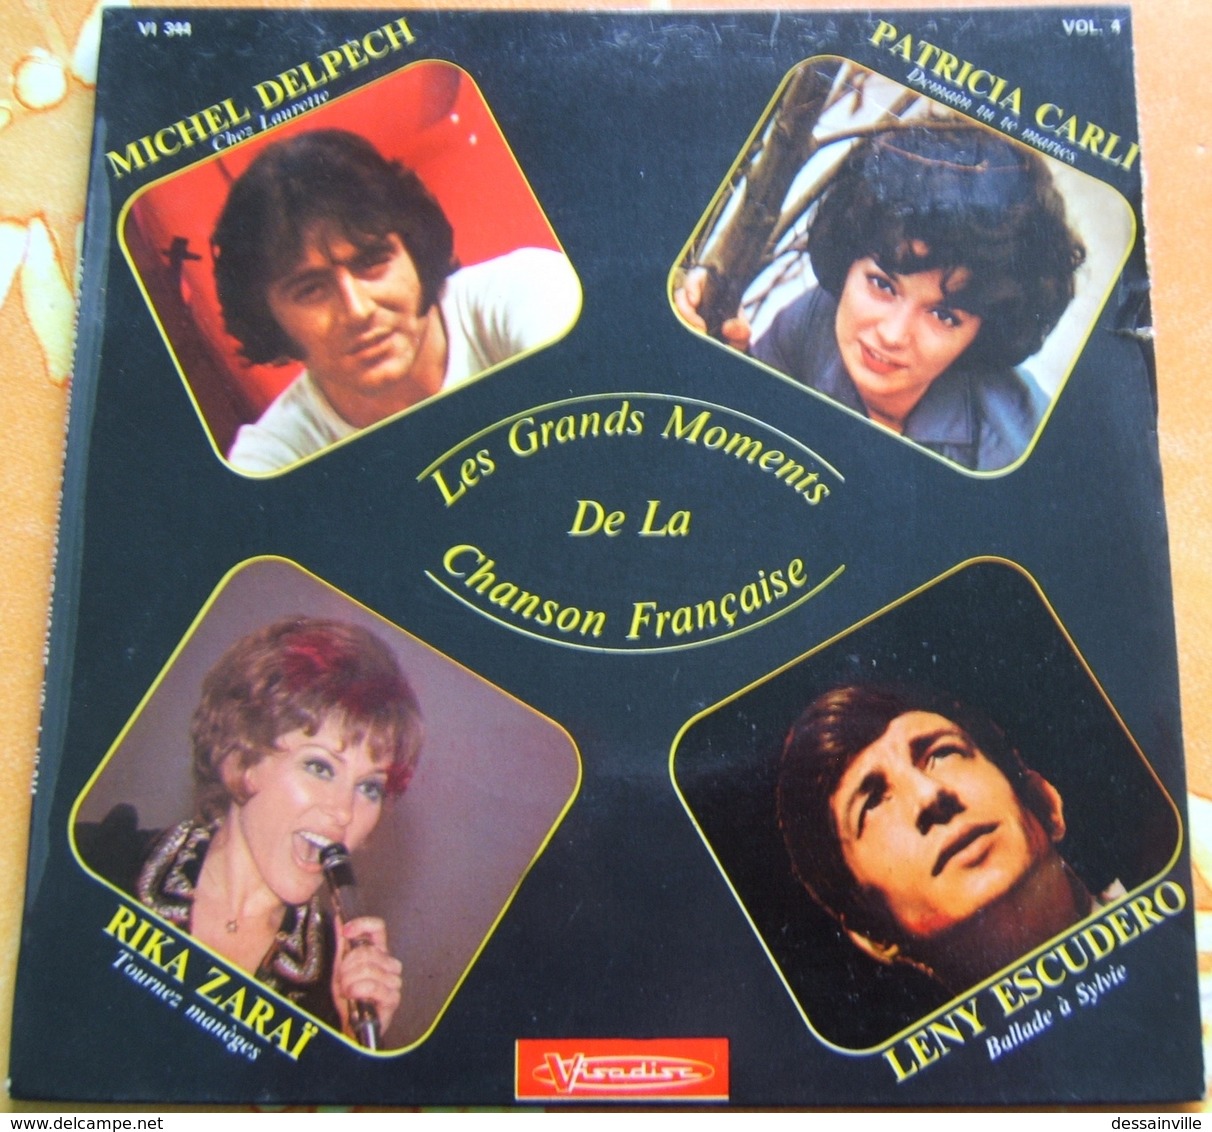 45 Tours VOLUME 4 - GRANDS MOMENTS CHANSON FRANCAISE - DELPECH CARLI ZARAÏ ESCUDERO - Compilations